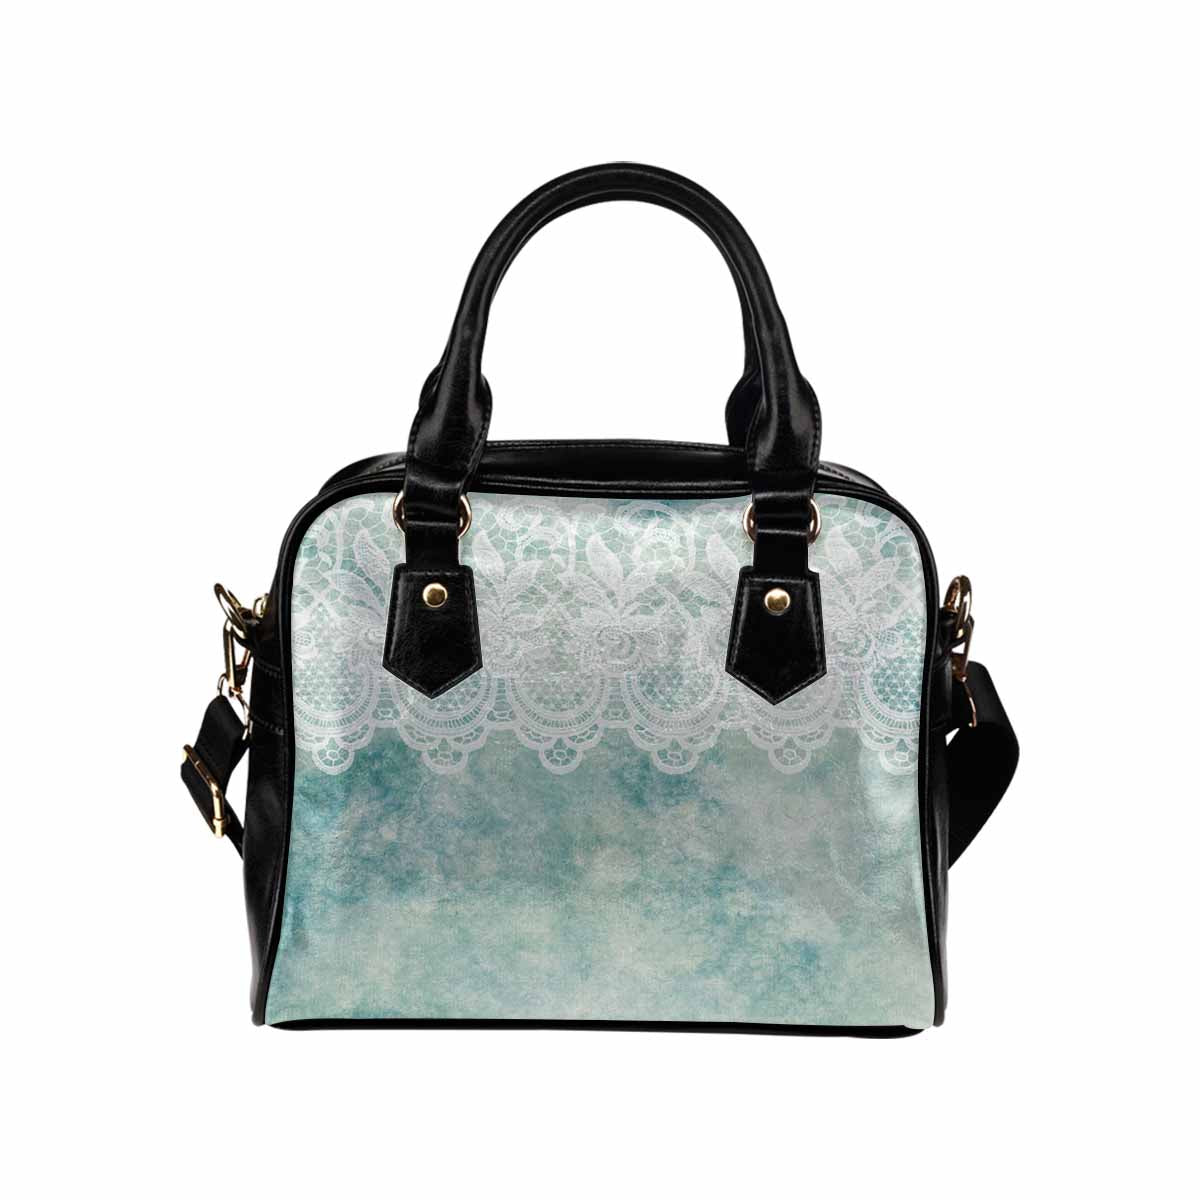 Victorian lace print, cute handbag, Mod 19163453, design 41